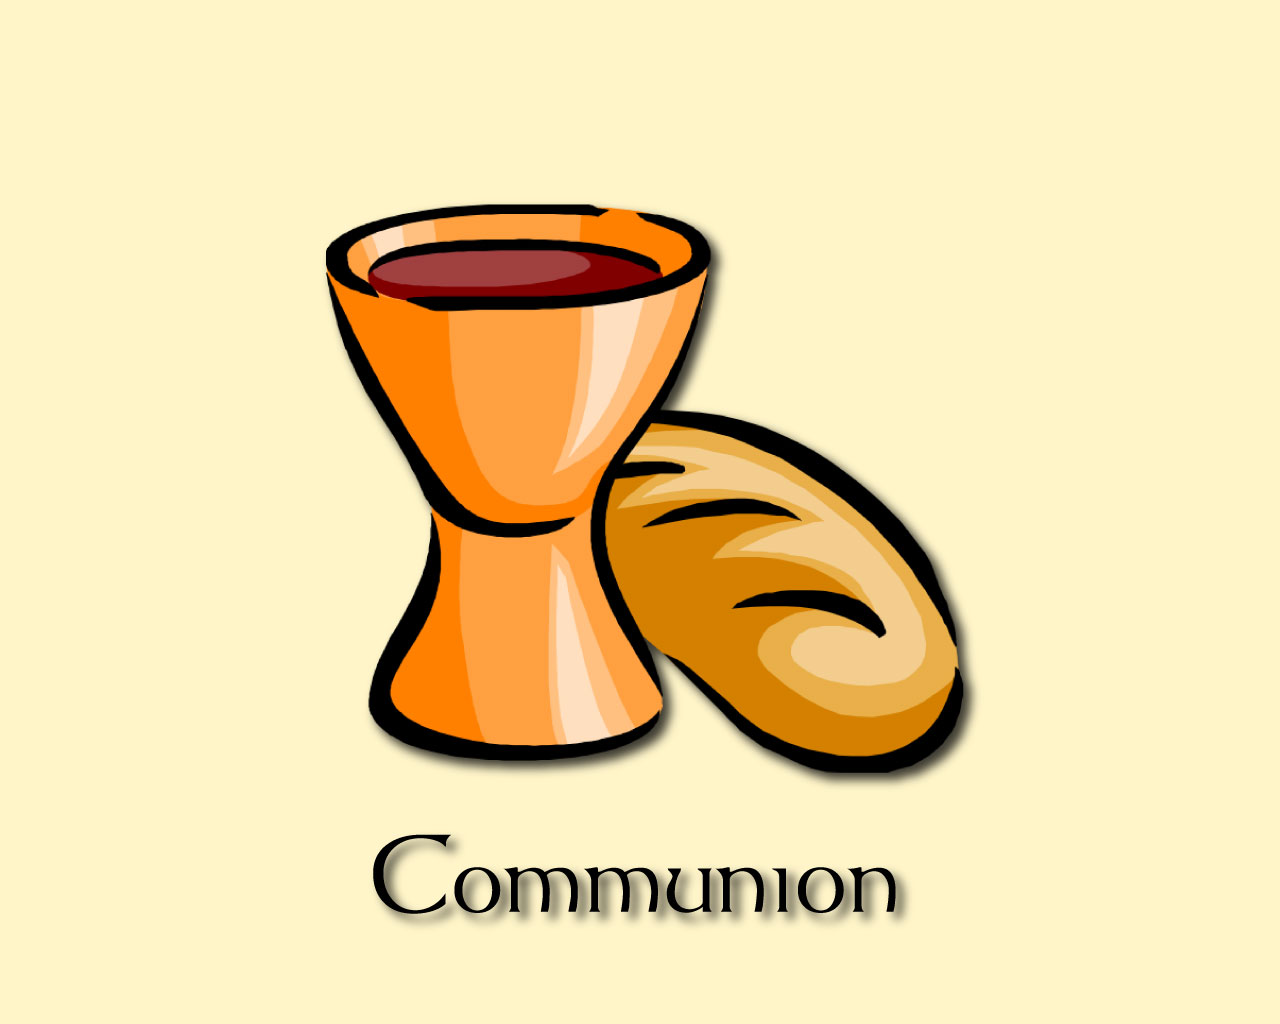 Images For > Communion Cup Clip Art